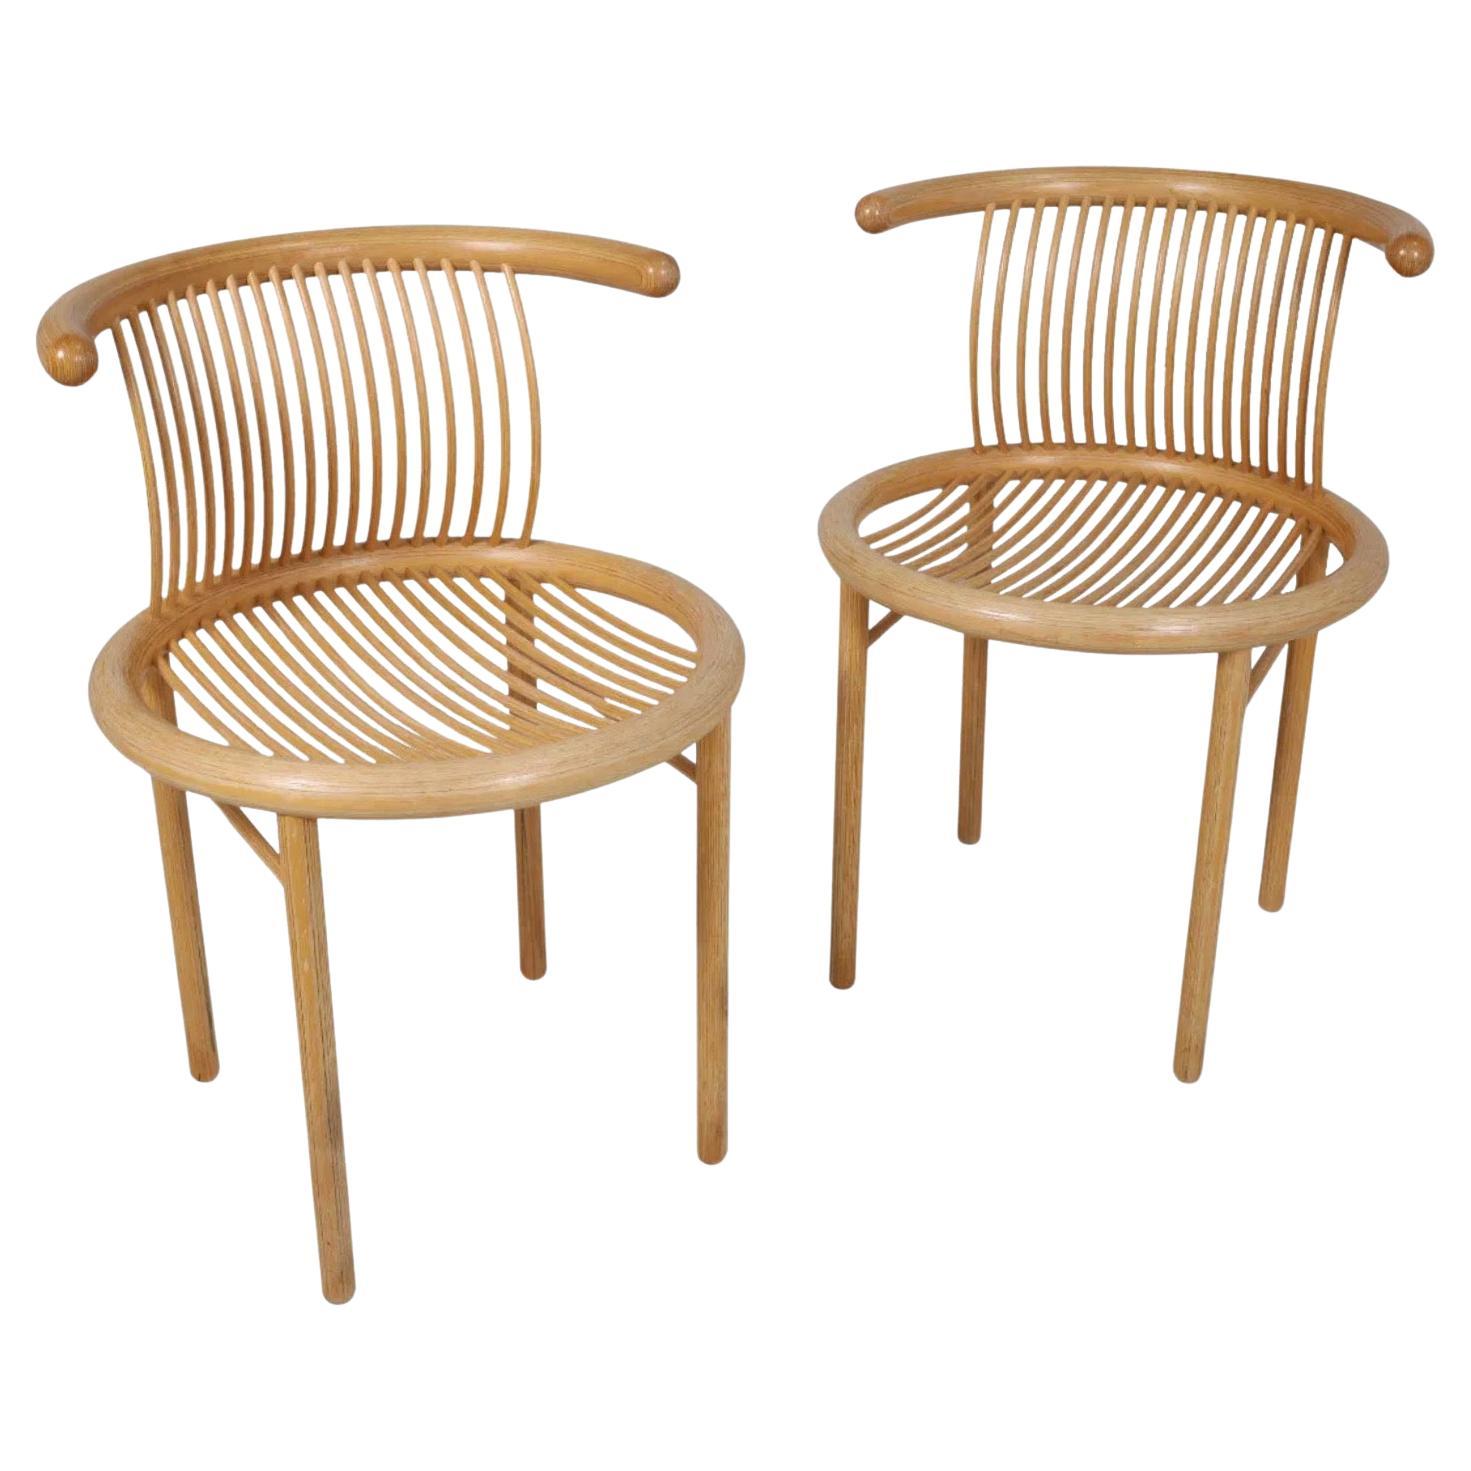 Helmut Lübke Chairs For Sale